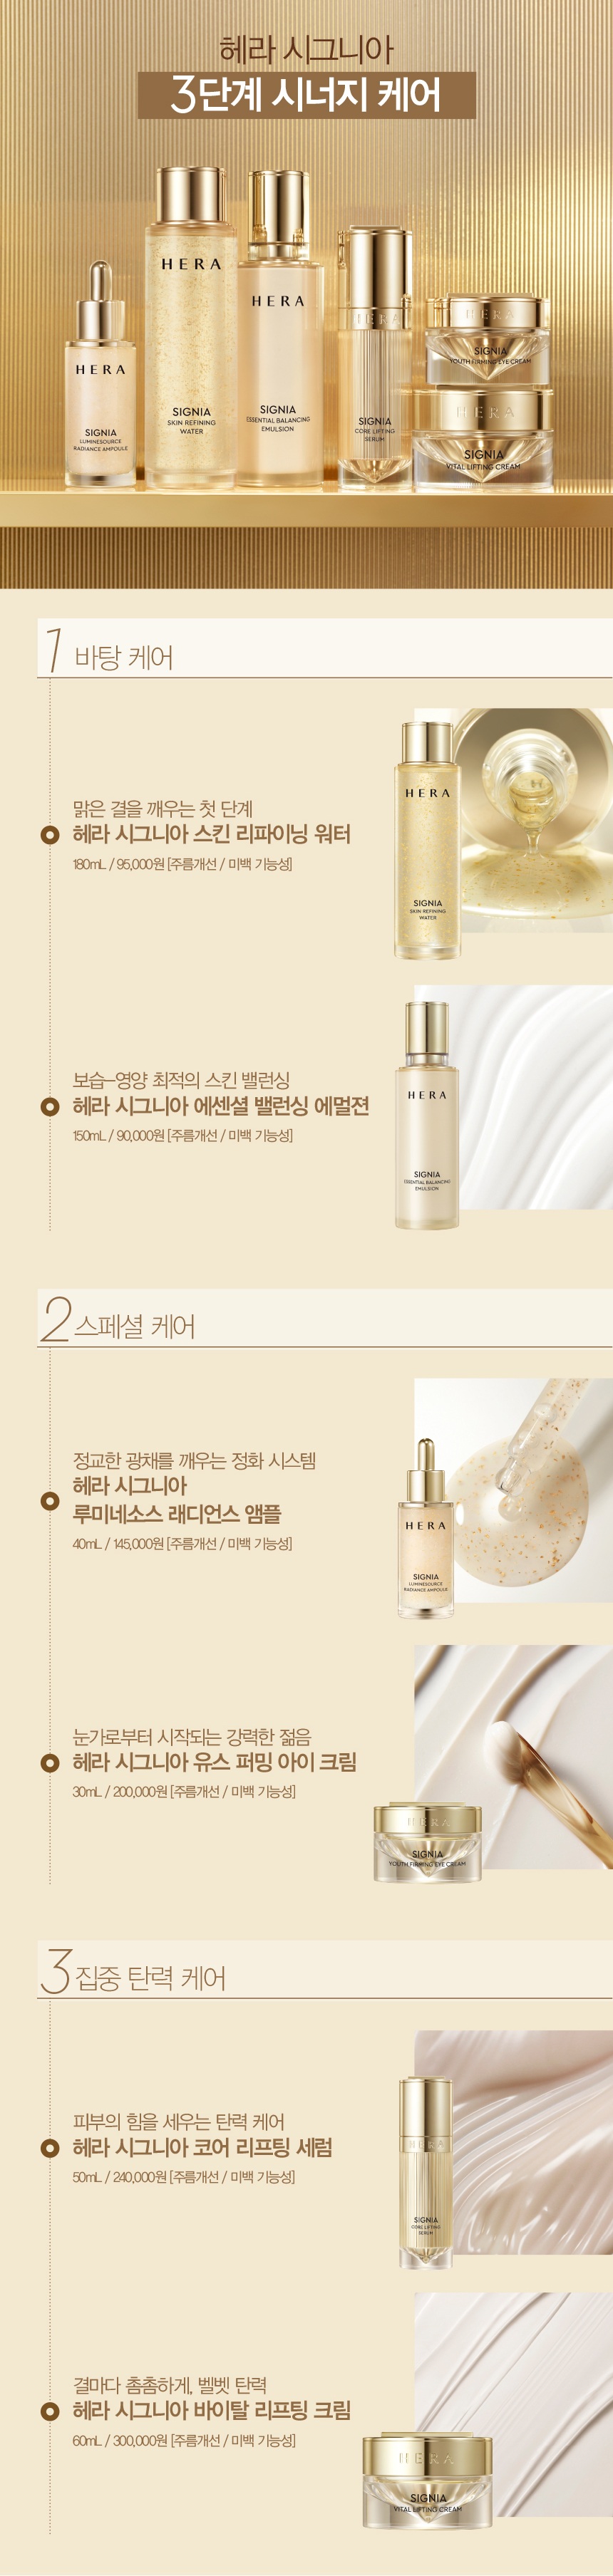 Hera Signia Core Lifting Serum korean skincare product onine shop malaysia China india2